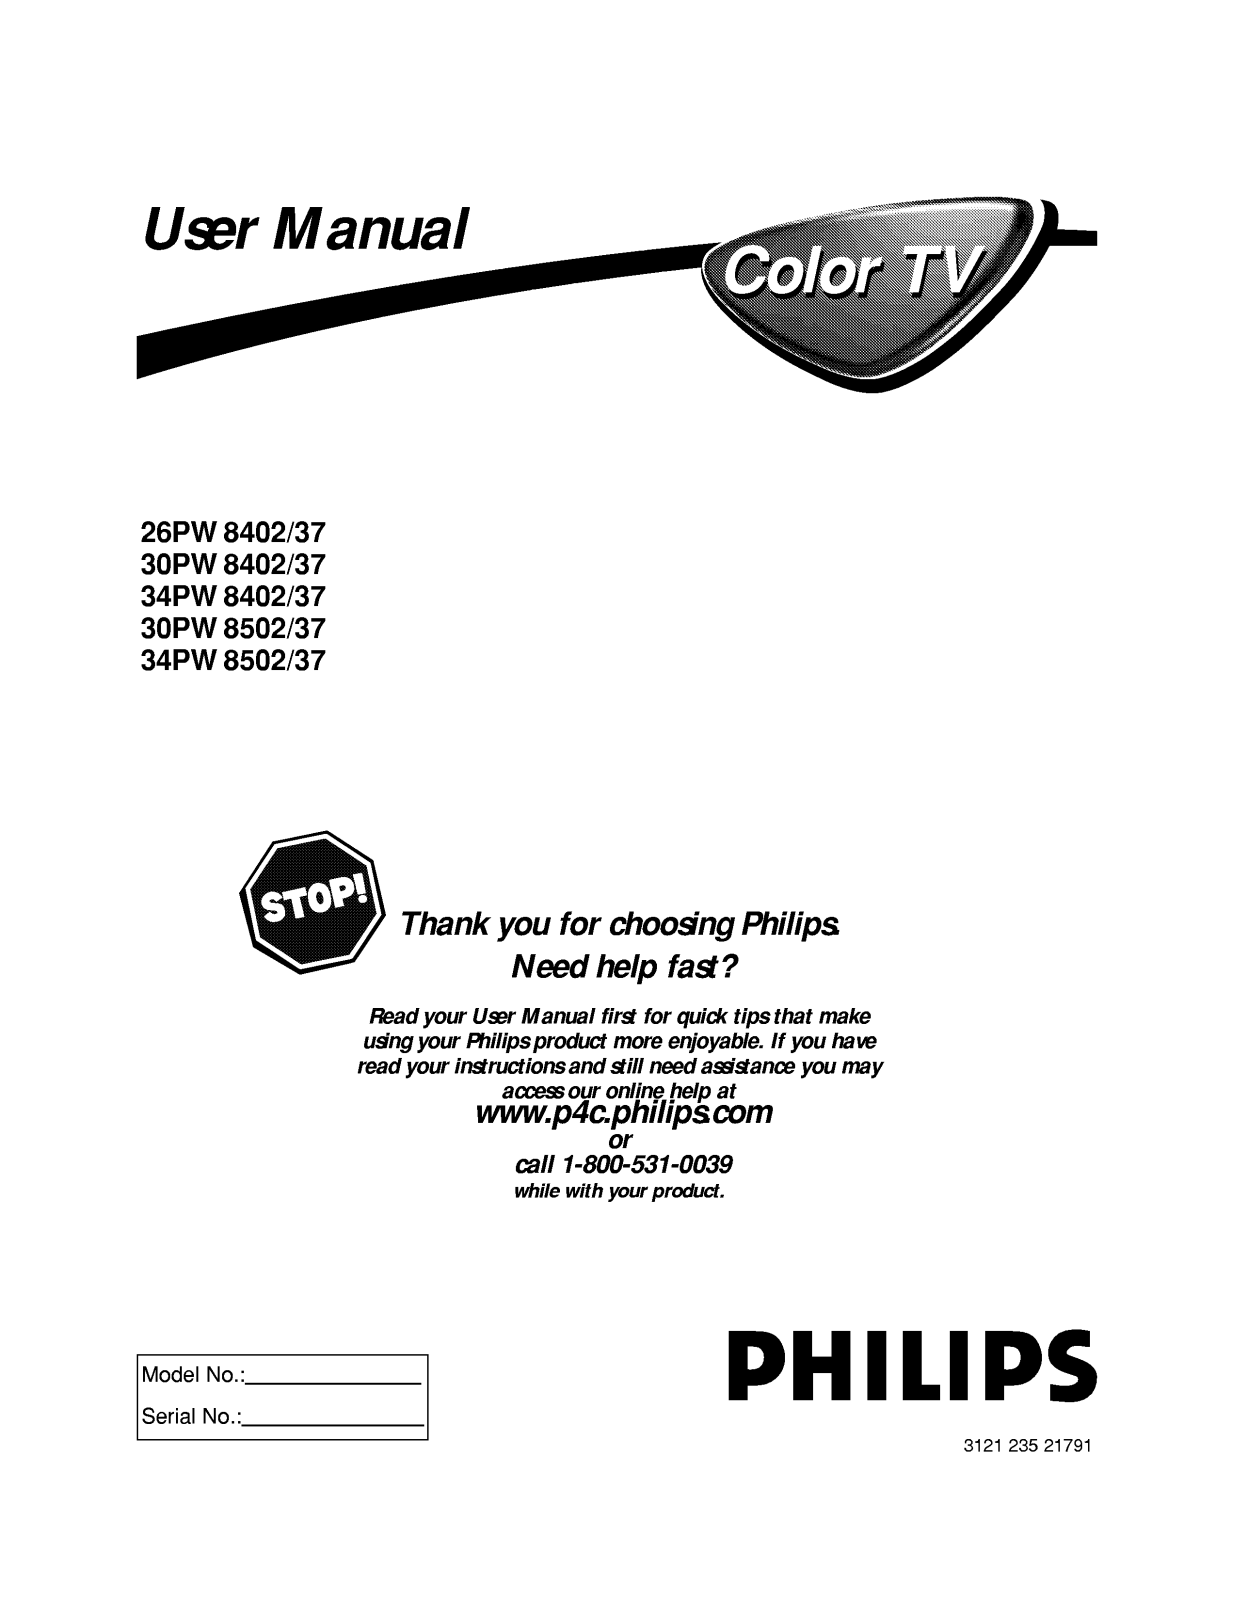 Philips 30PW8502, 30PW8502-37B, 26PW8402 User Manual